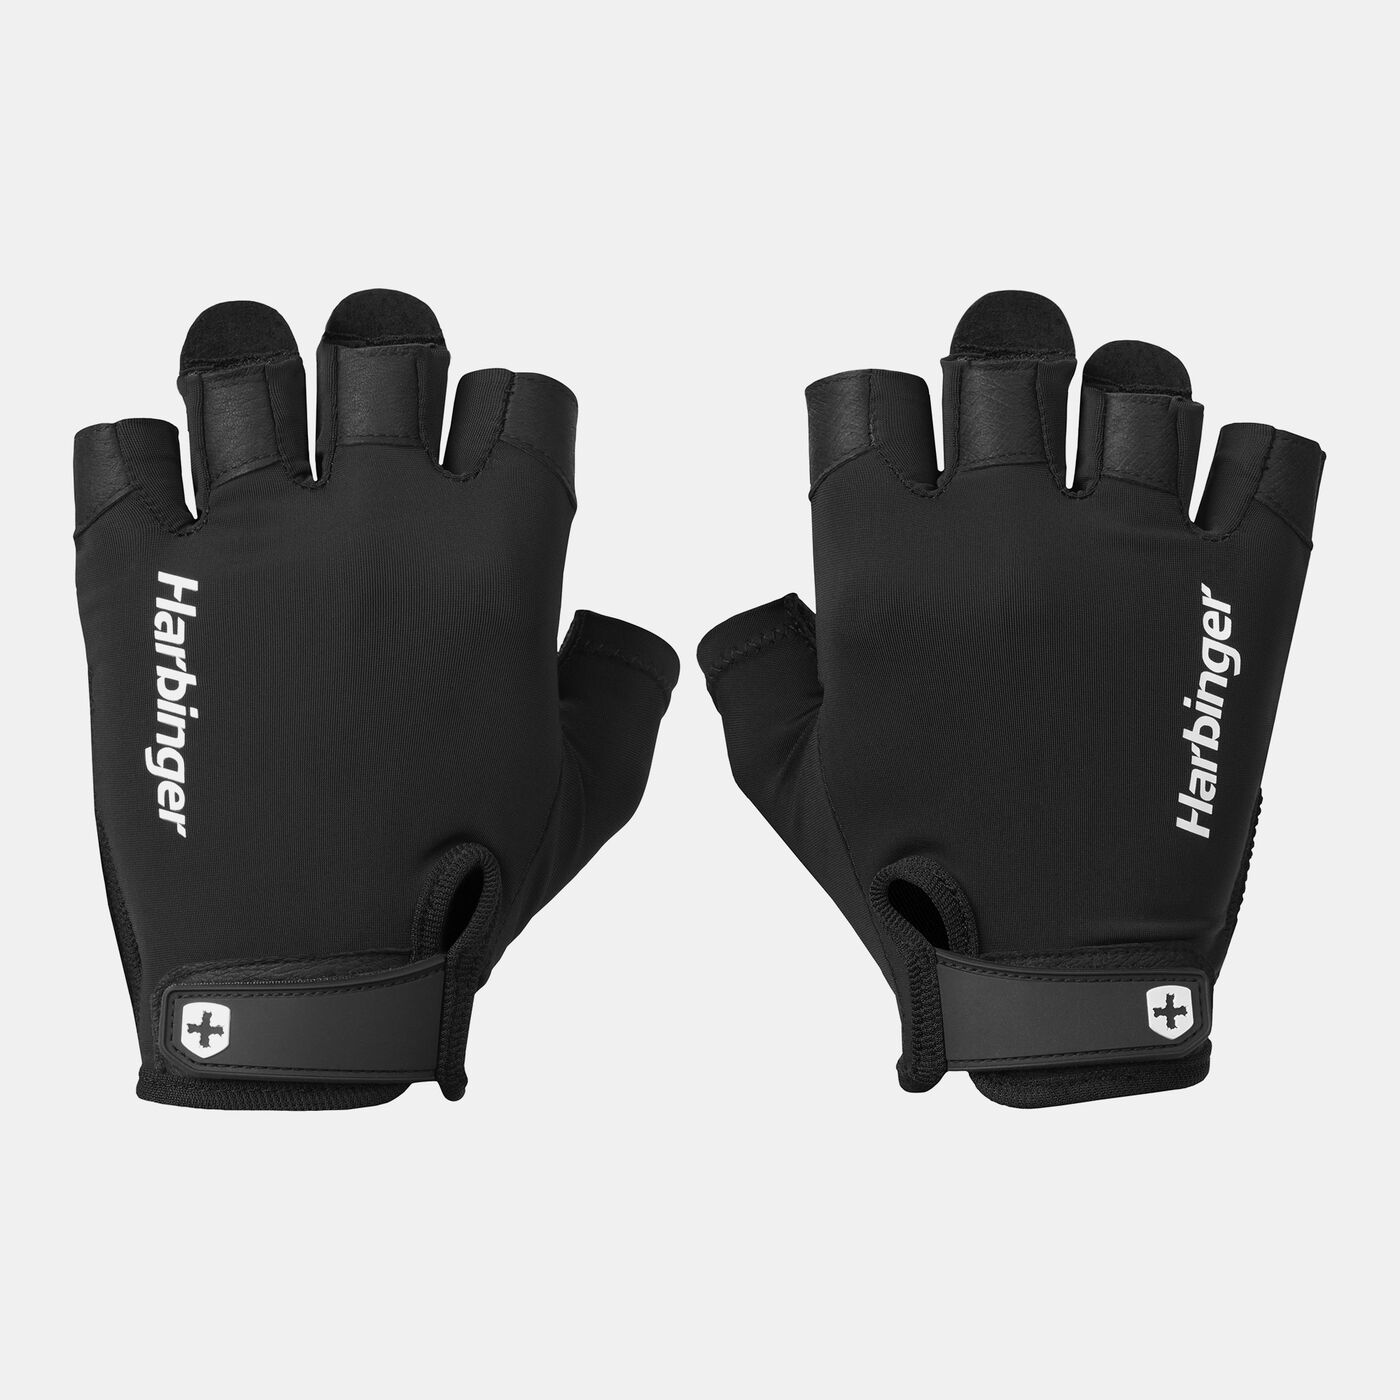 Pro 2.0 Gloves